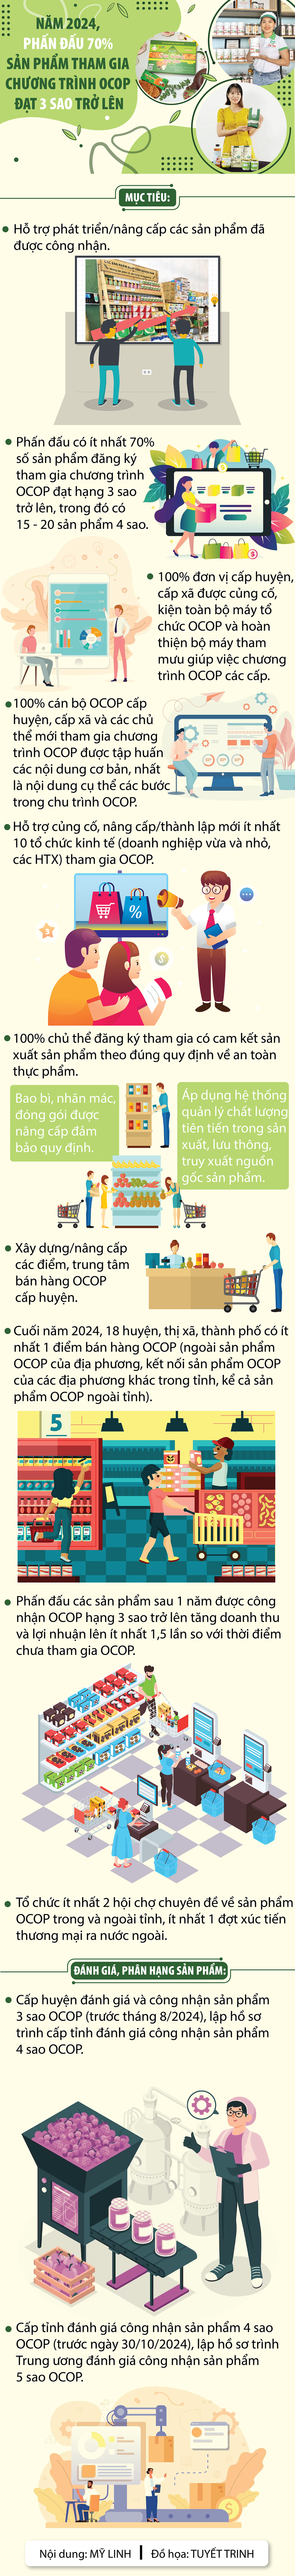 info-ocop-3-sao.png